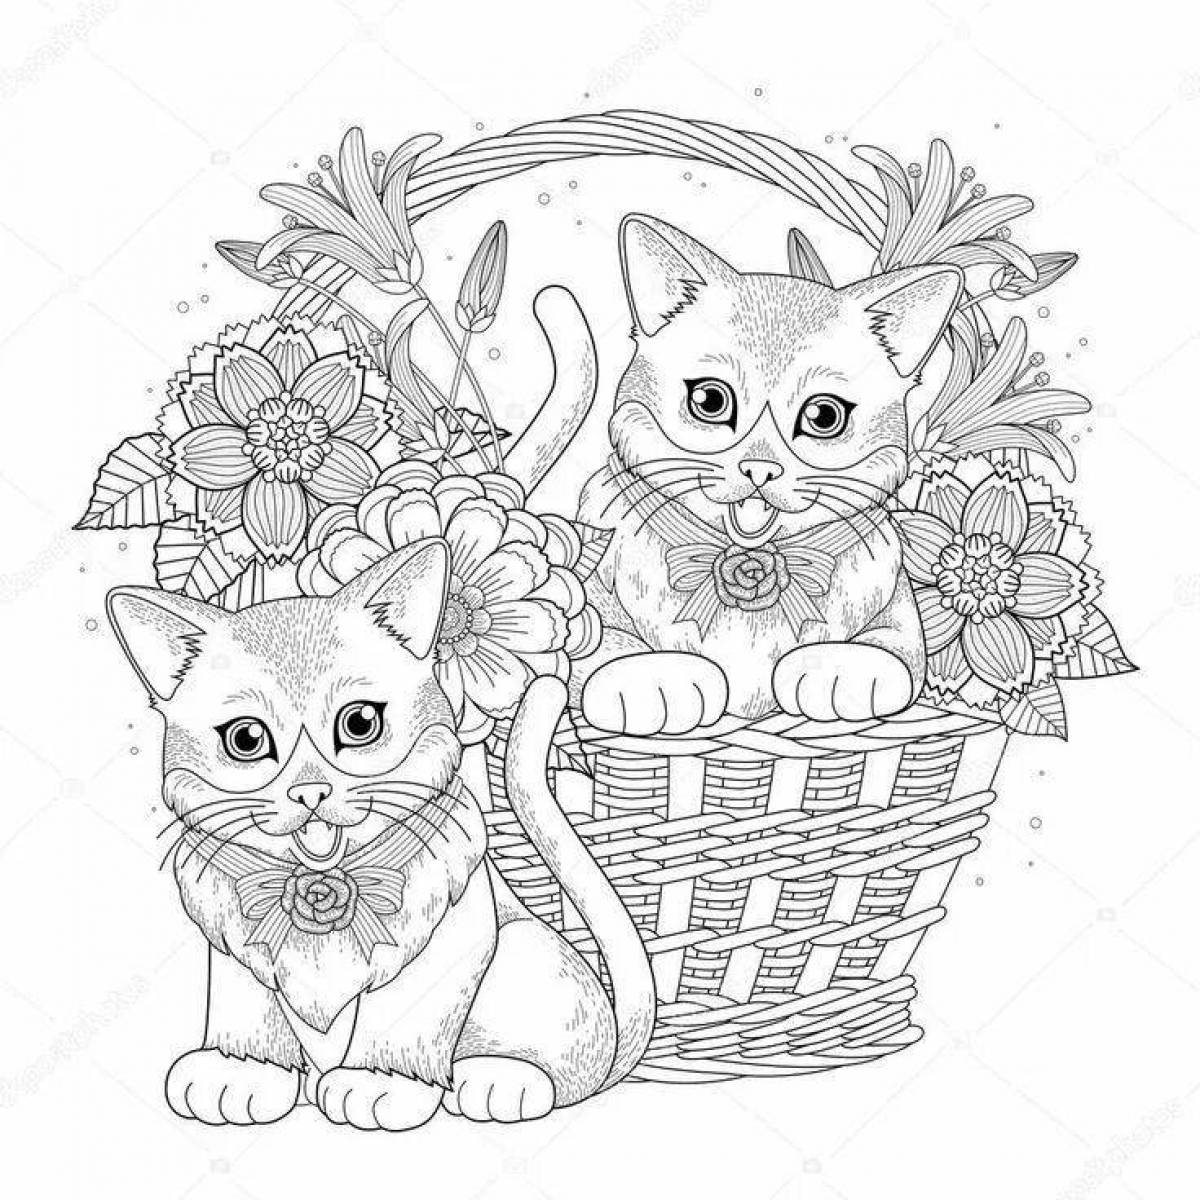 Funny kittens in a basket